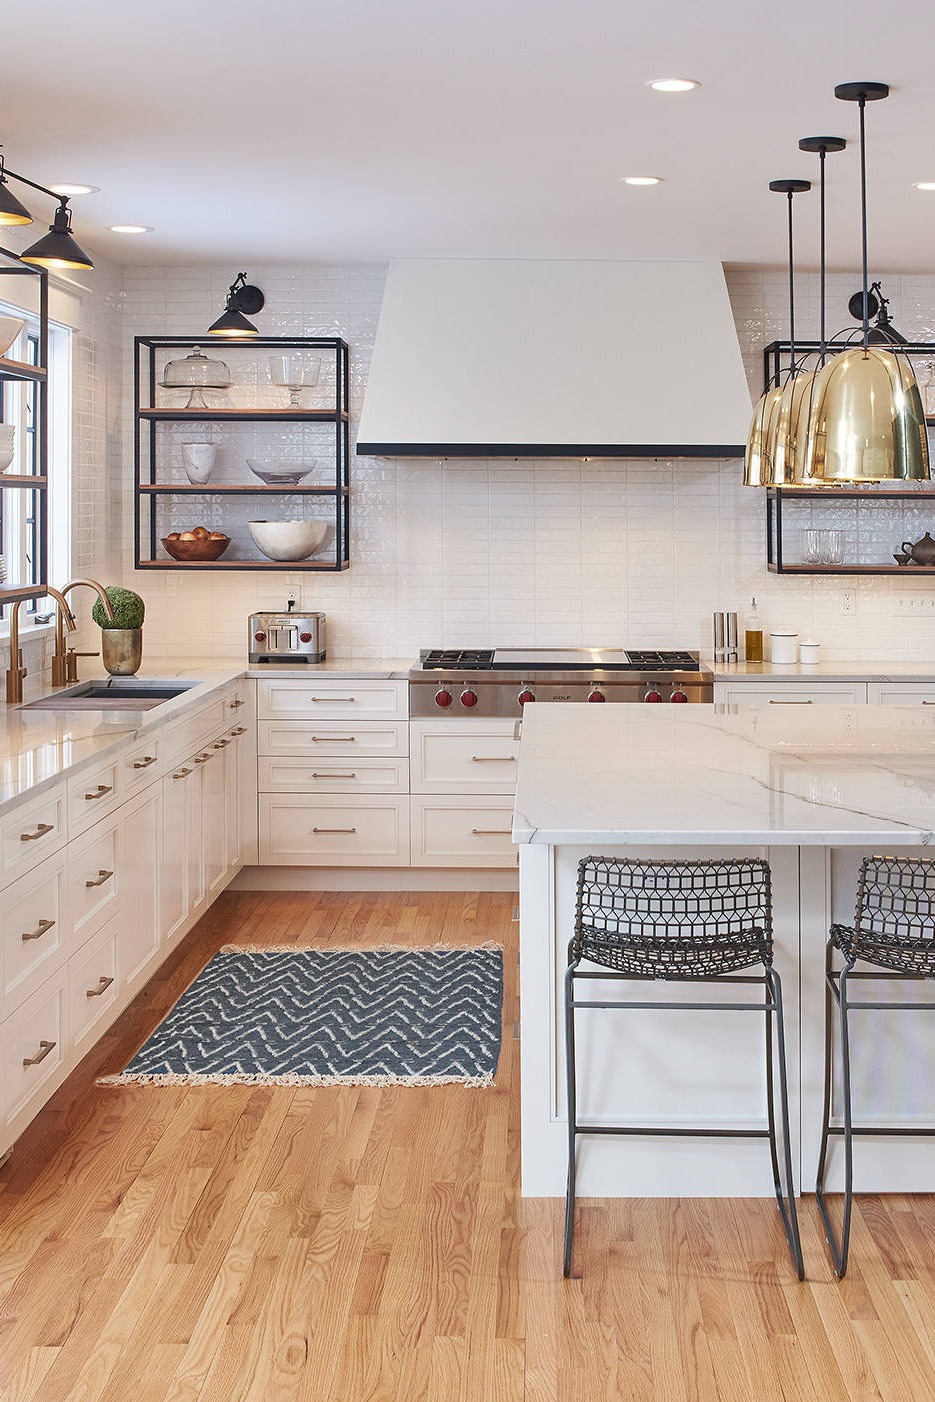 White Subway Tile Backsplash With White Cabinets Granite Countertops Kitchen Remodel White Tile